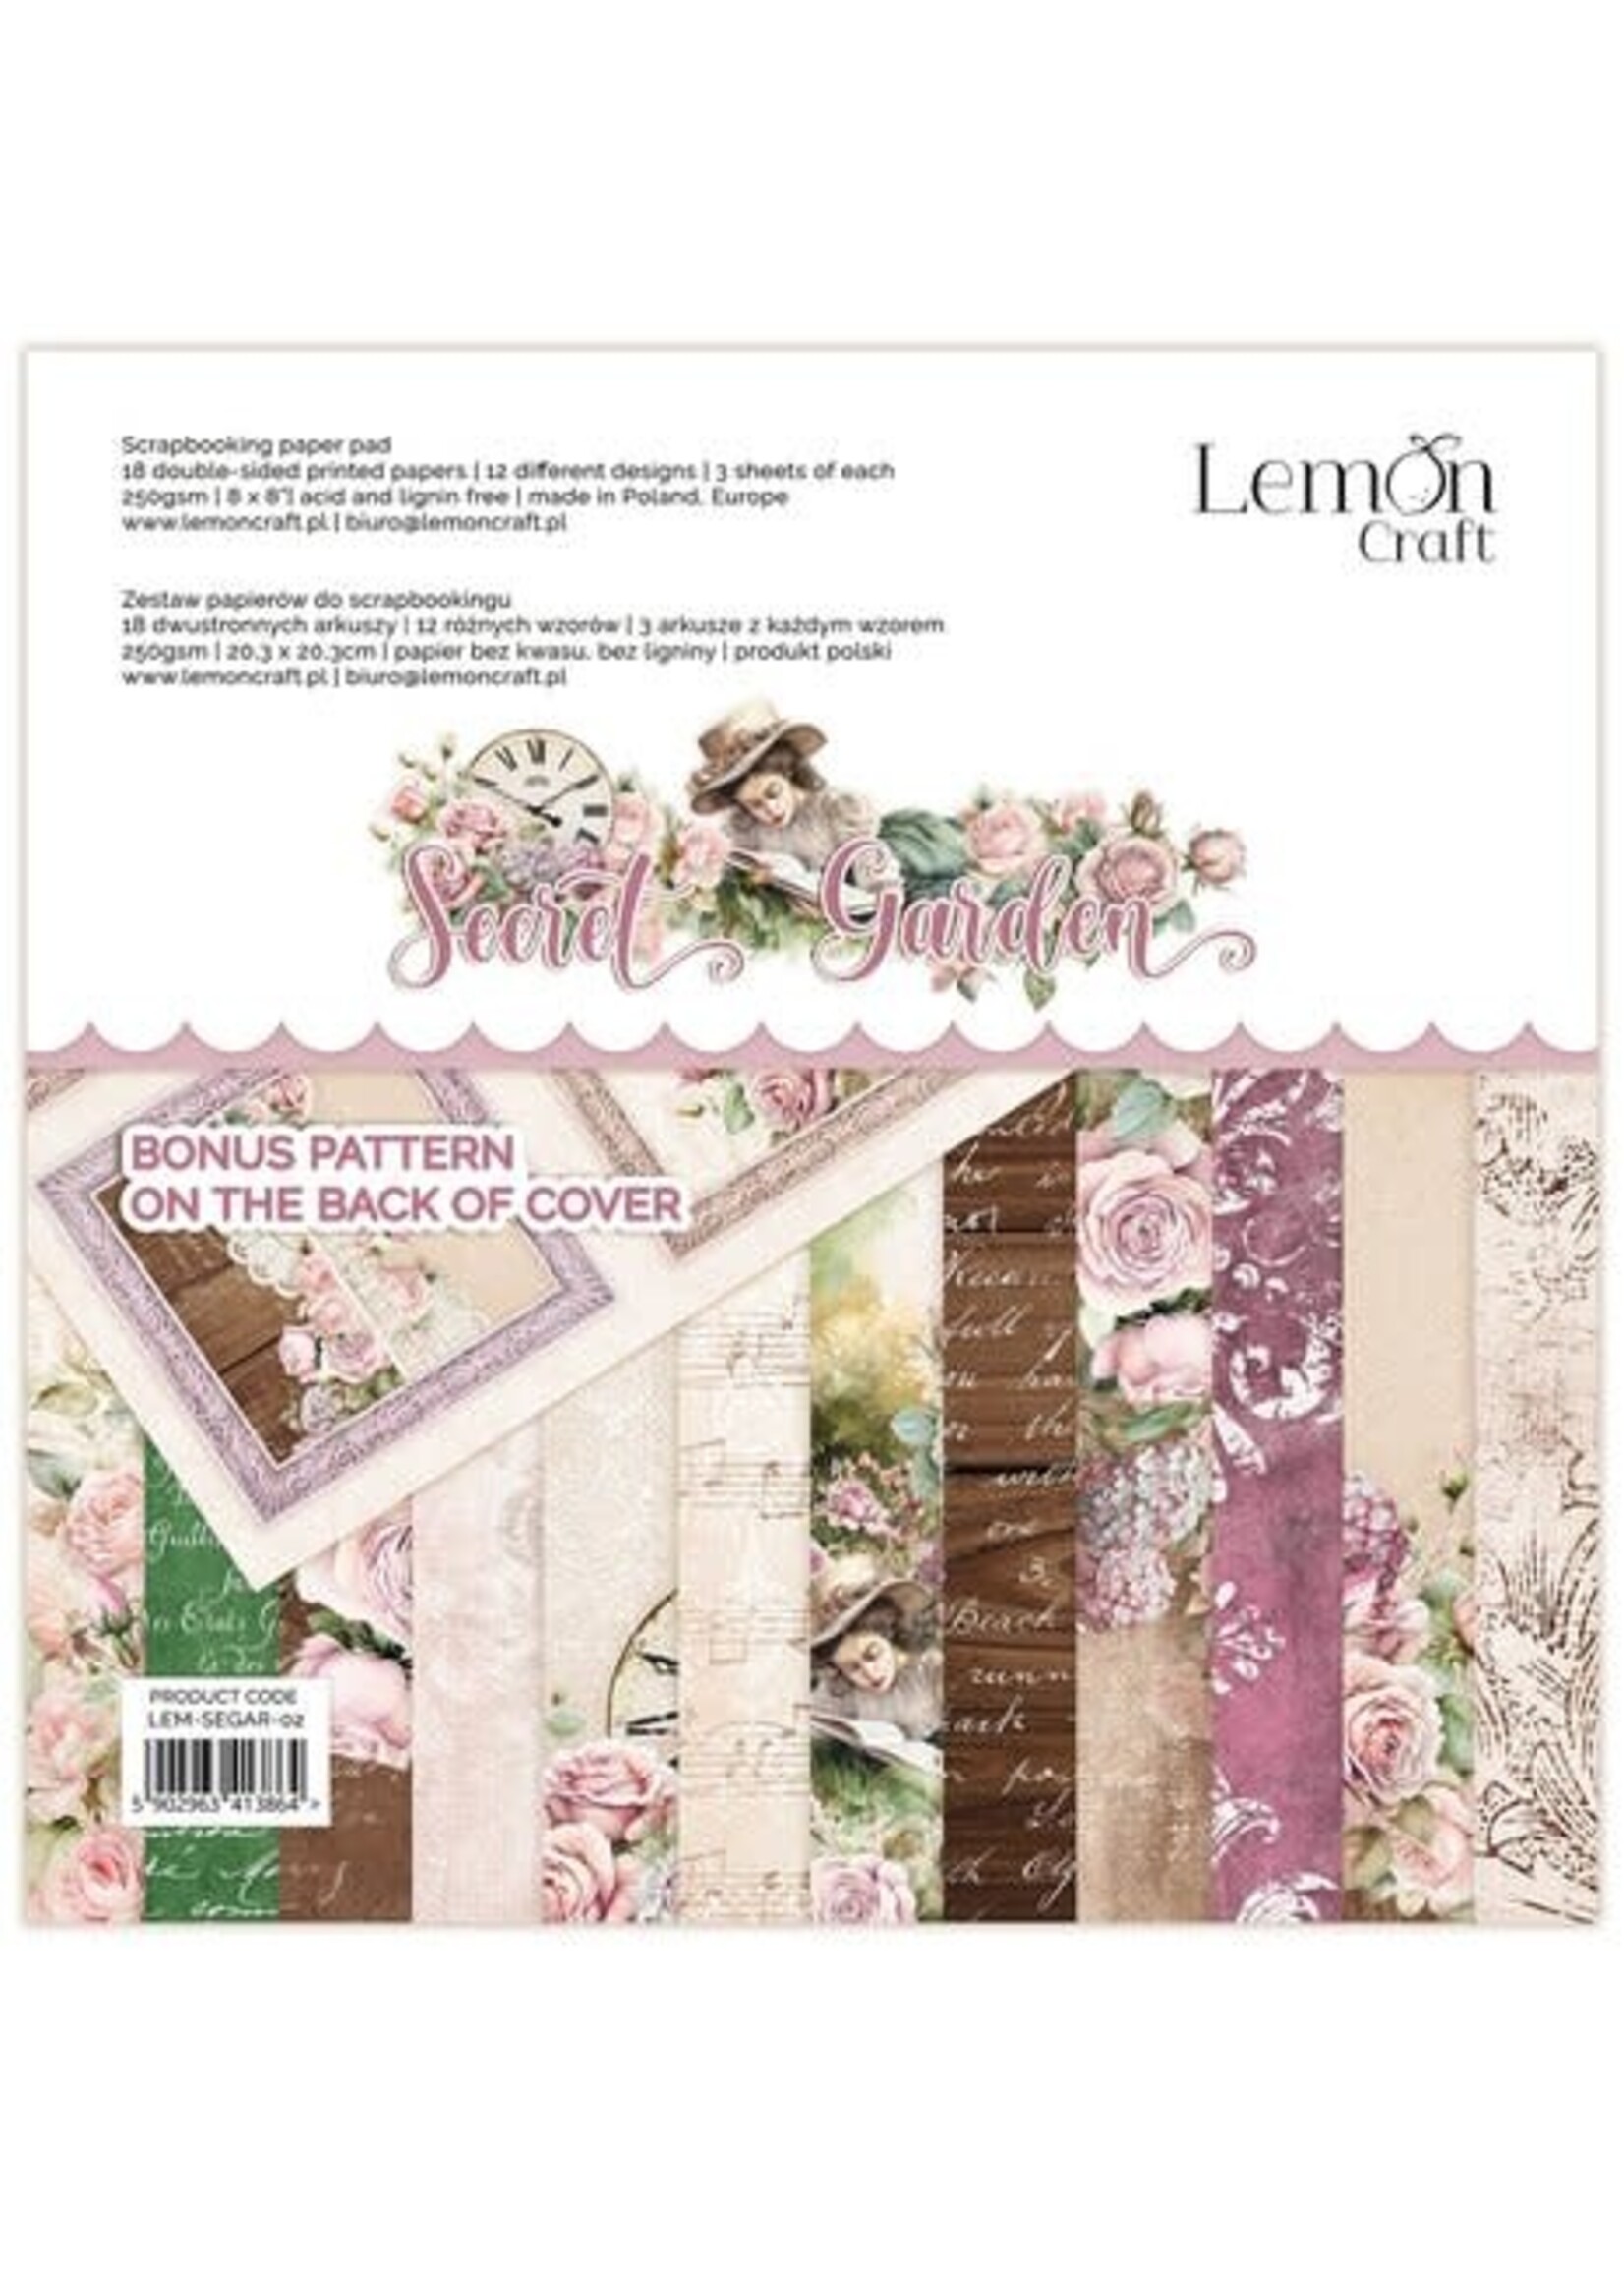 Lemon Craft Secret Garden 8x8 Inch Paper Pad (LEM-SEGAR-02